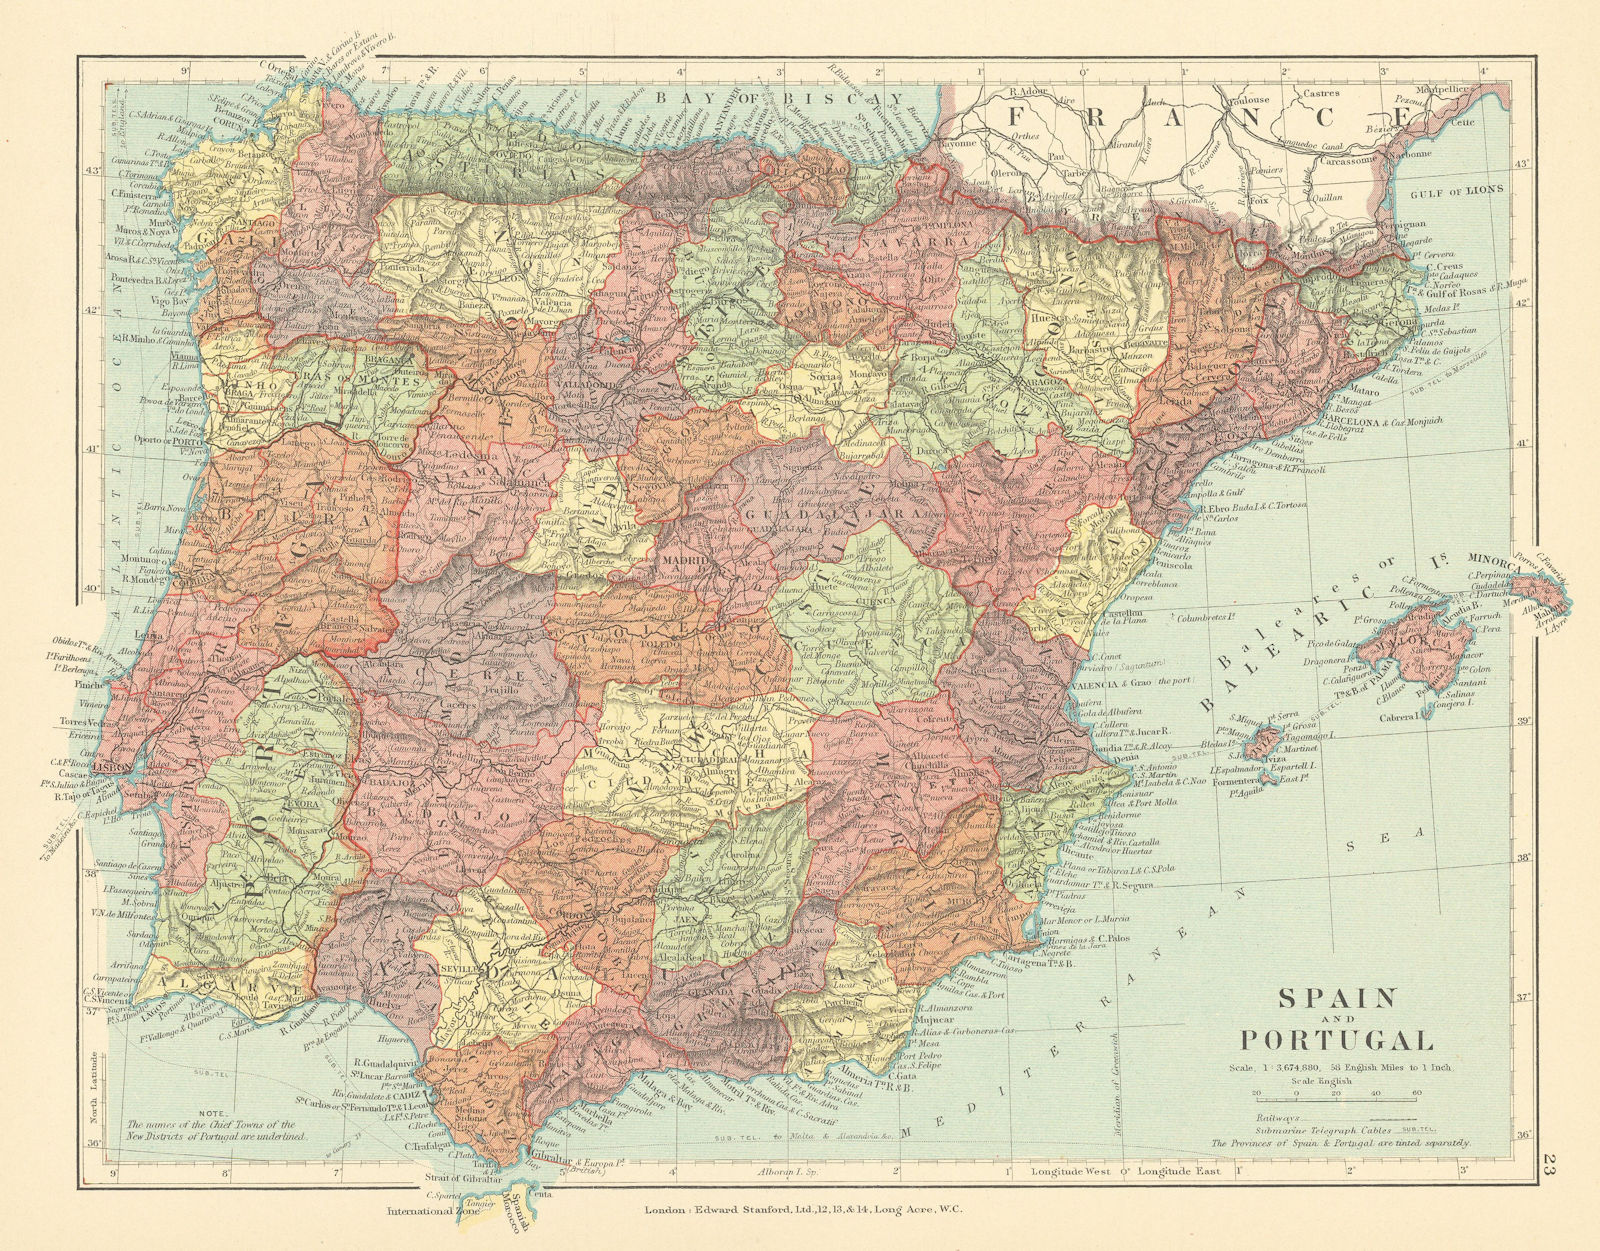 Spain & Portugal. Iberia. Tangier International Zone. STANFORD c1925 old map